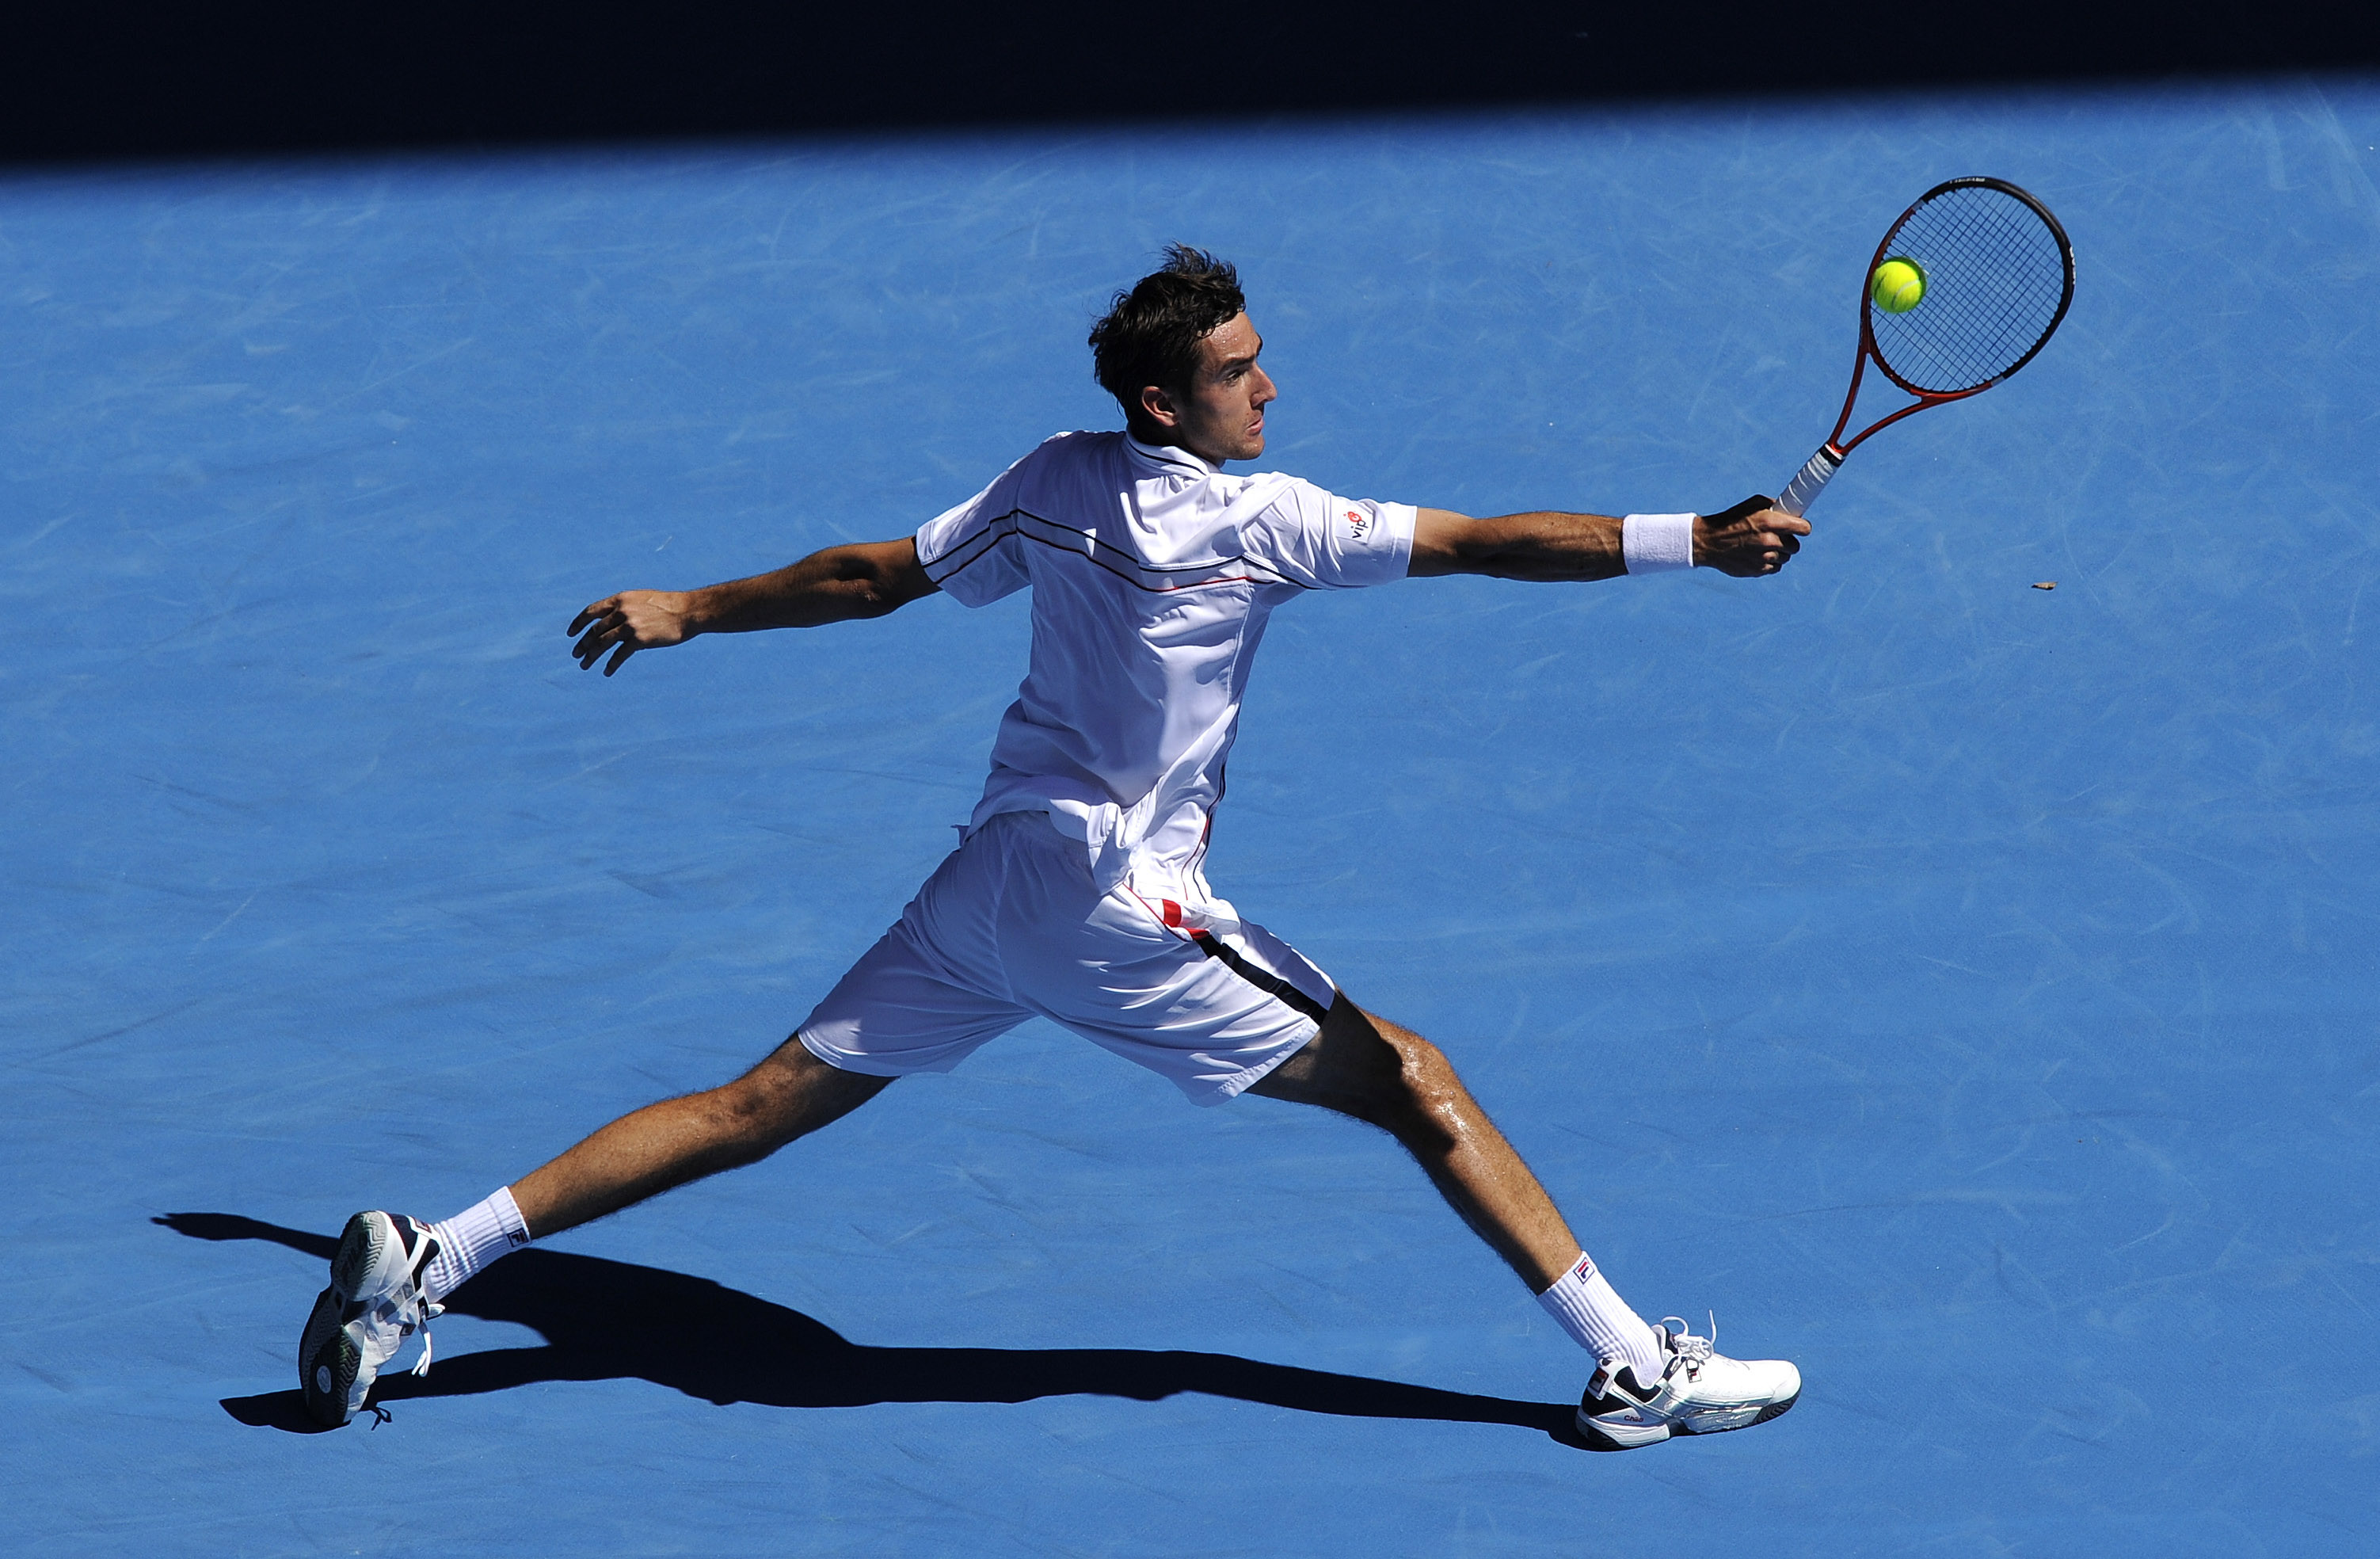 Tennis, Kvartsfinal, Marin Cilic, Roger Federer, Andy Roddick, Juan Martin del Potro, Australian Open, Andy Murray